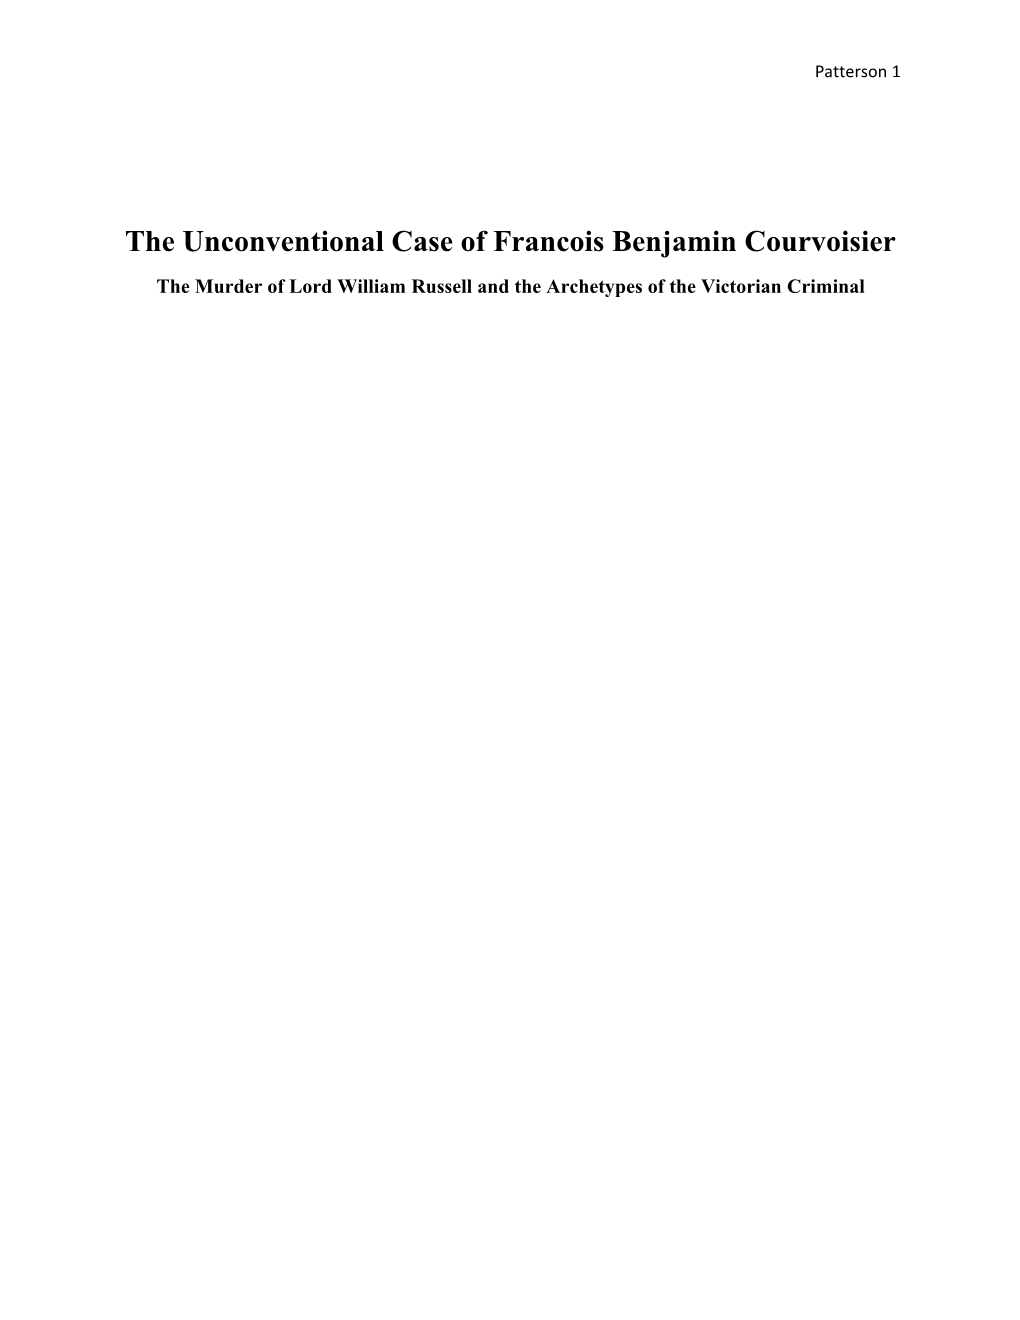 The Unconventional Case of Francois Benjamin Courvoisier